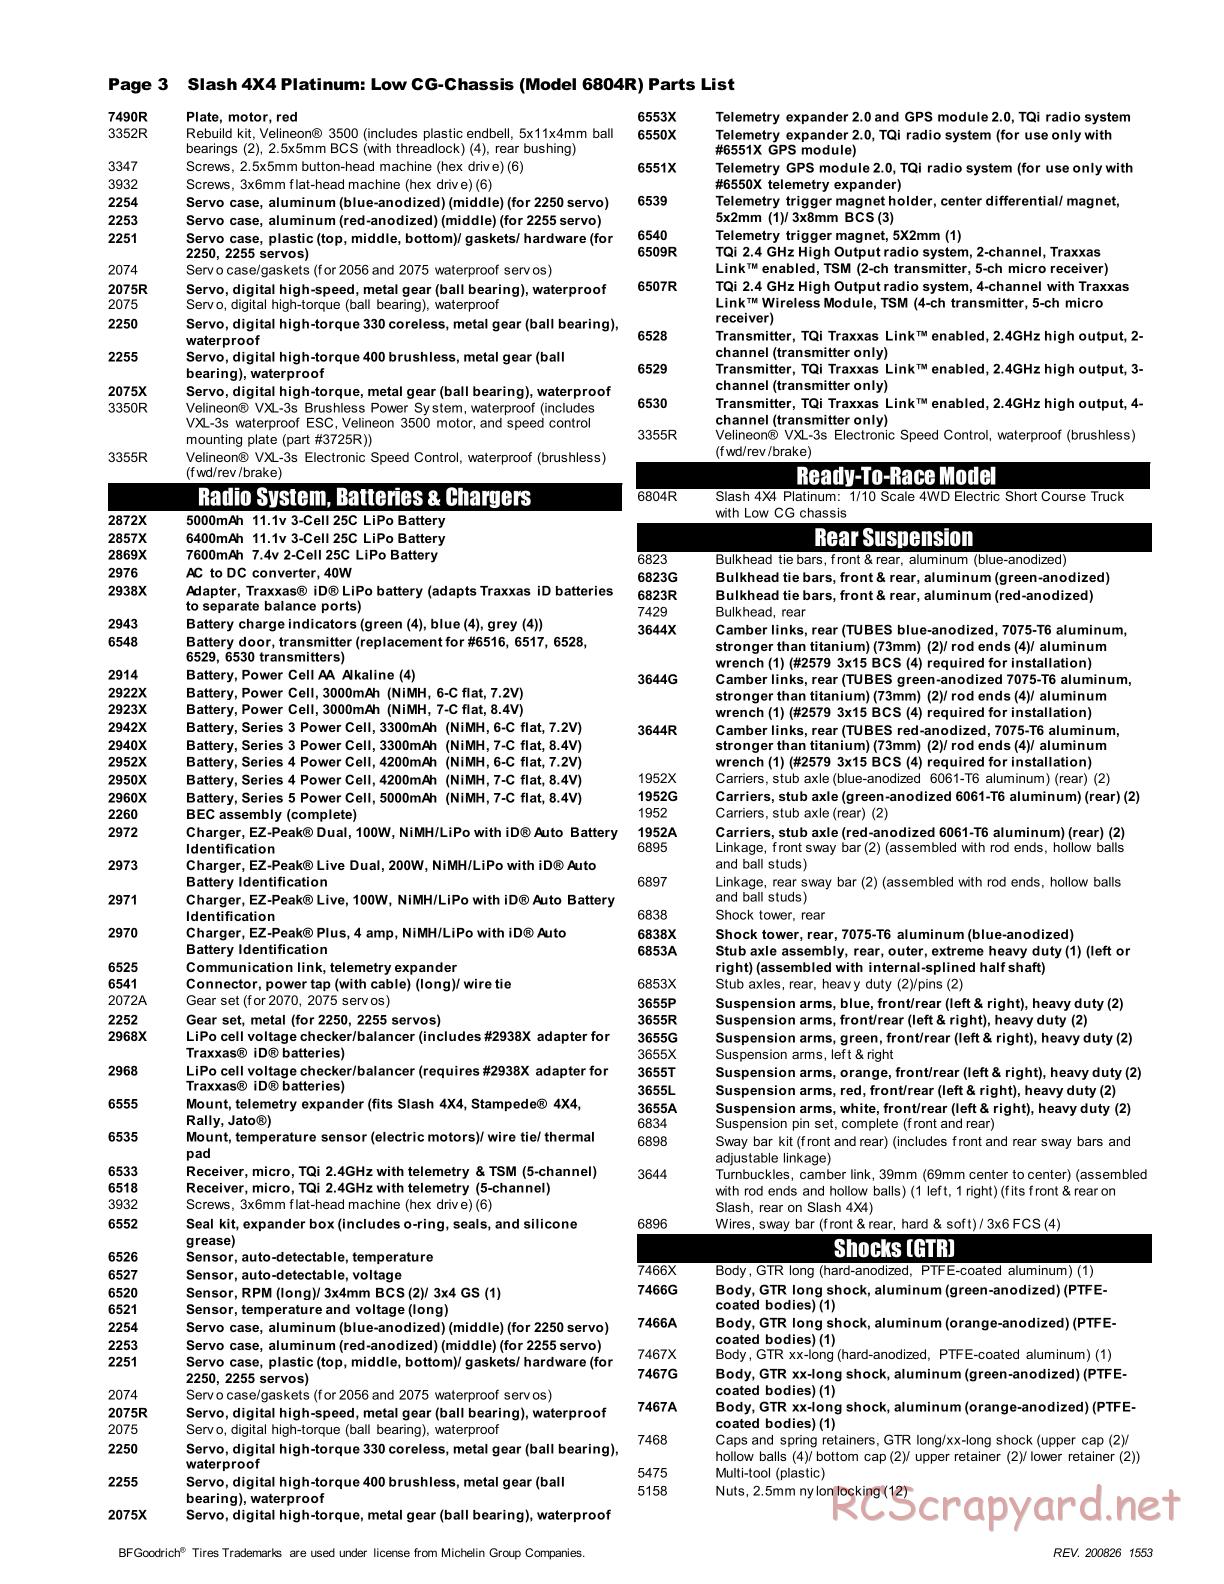 Traxxas - Slash 4x4 Platinum Ed (2012) - Parts List - Page 3